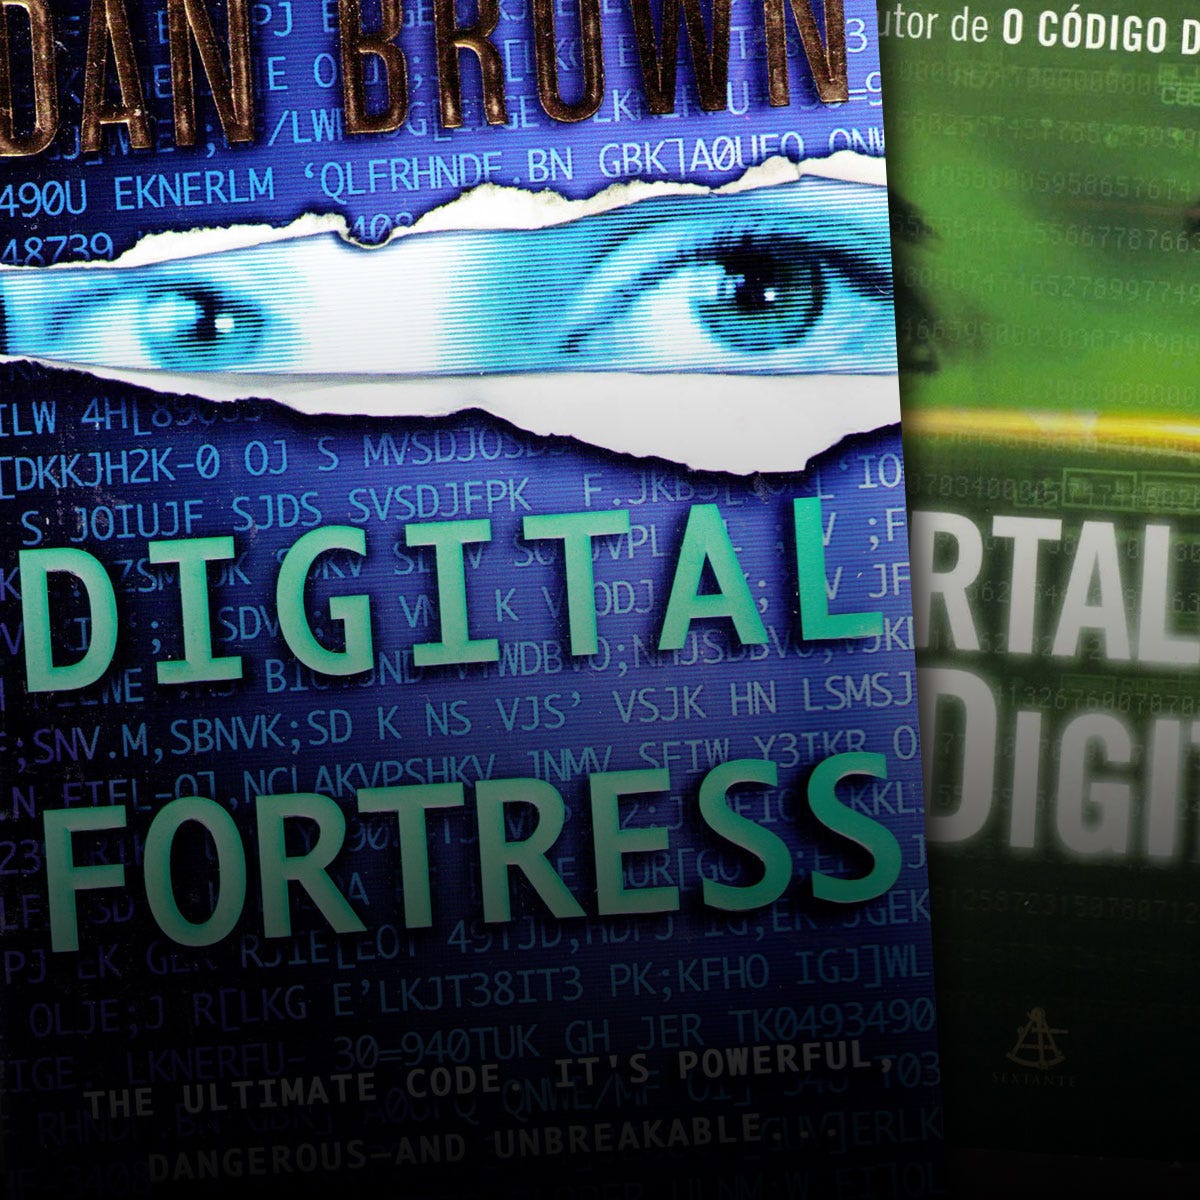 Get Book Digital fortress Free